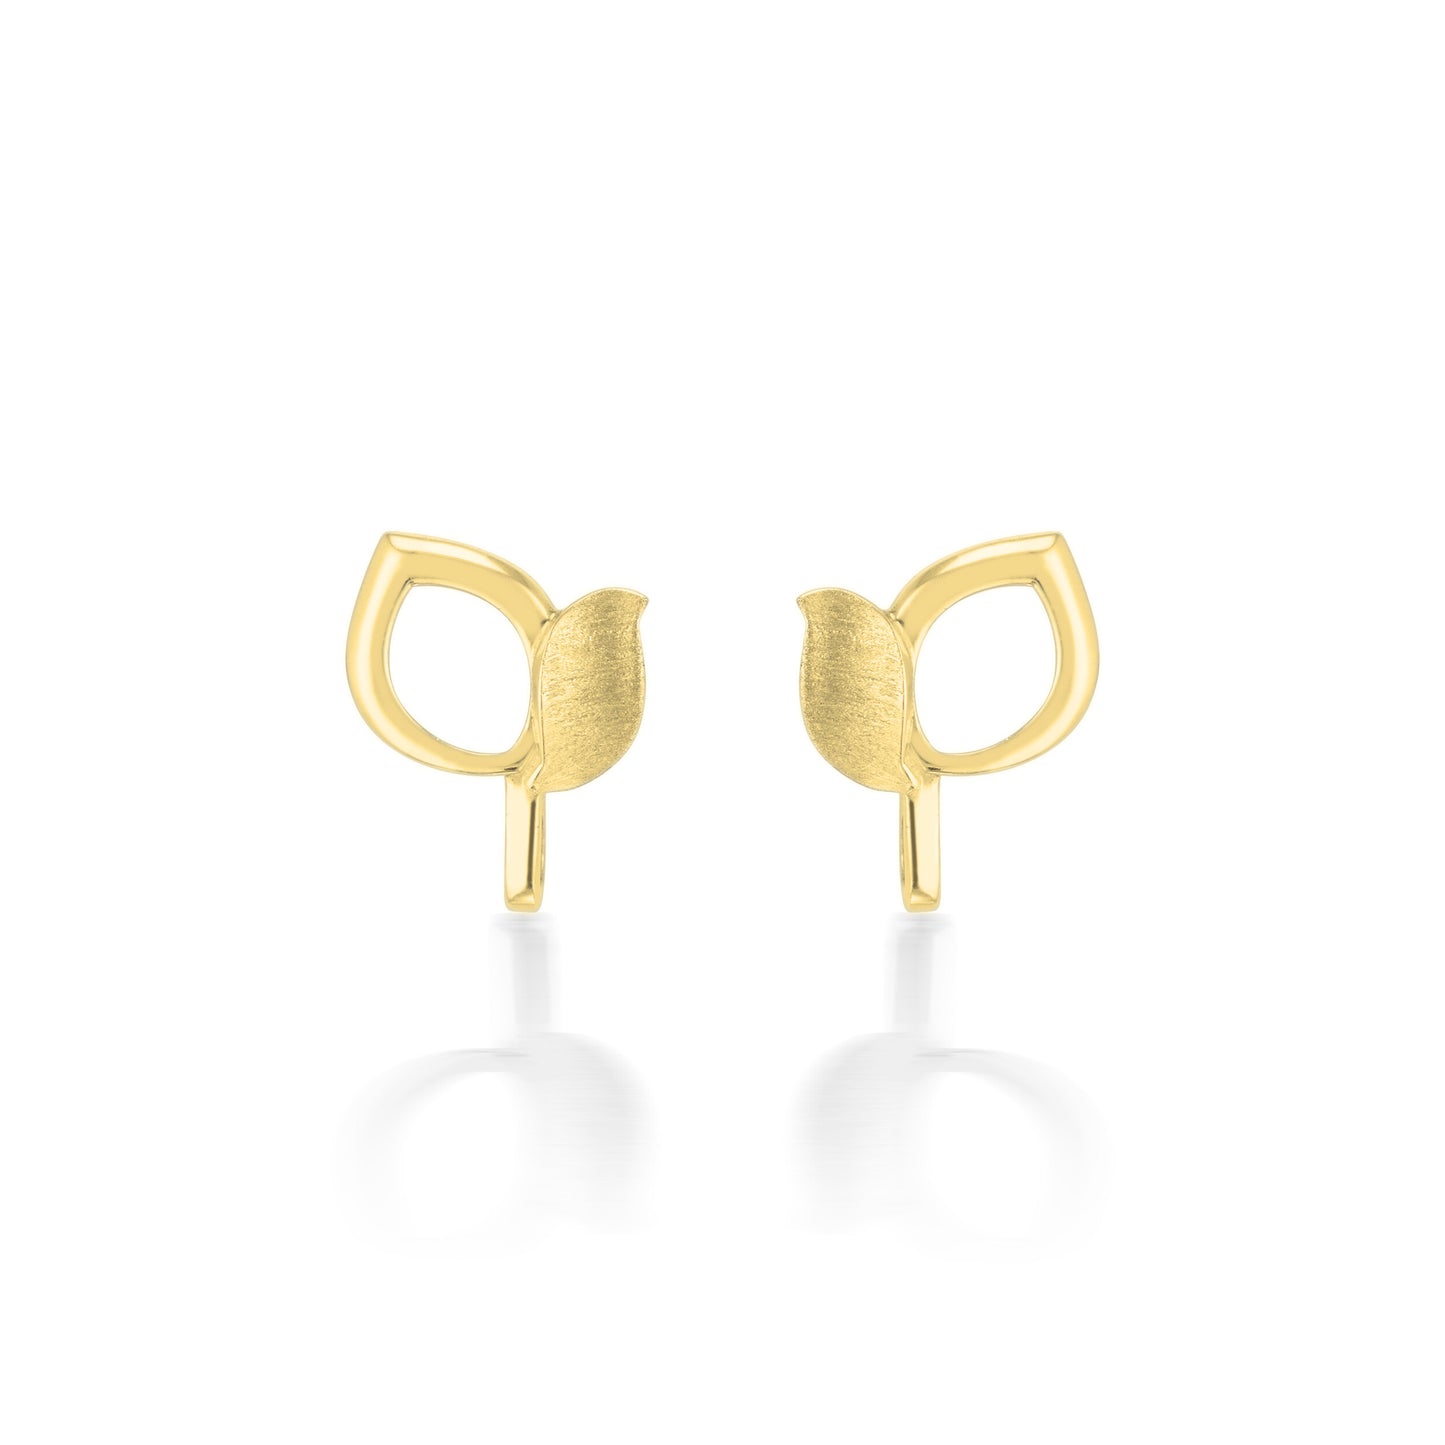 Bloom Stud Earrings in Gold